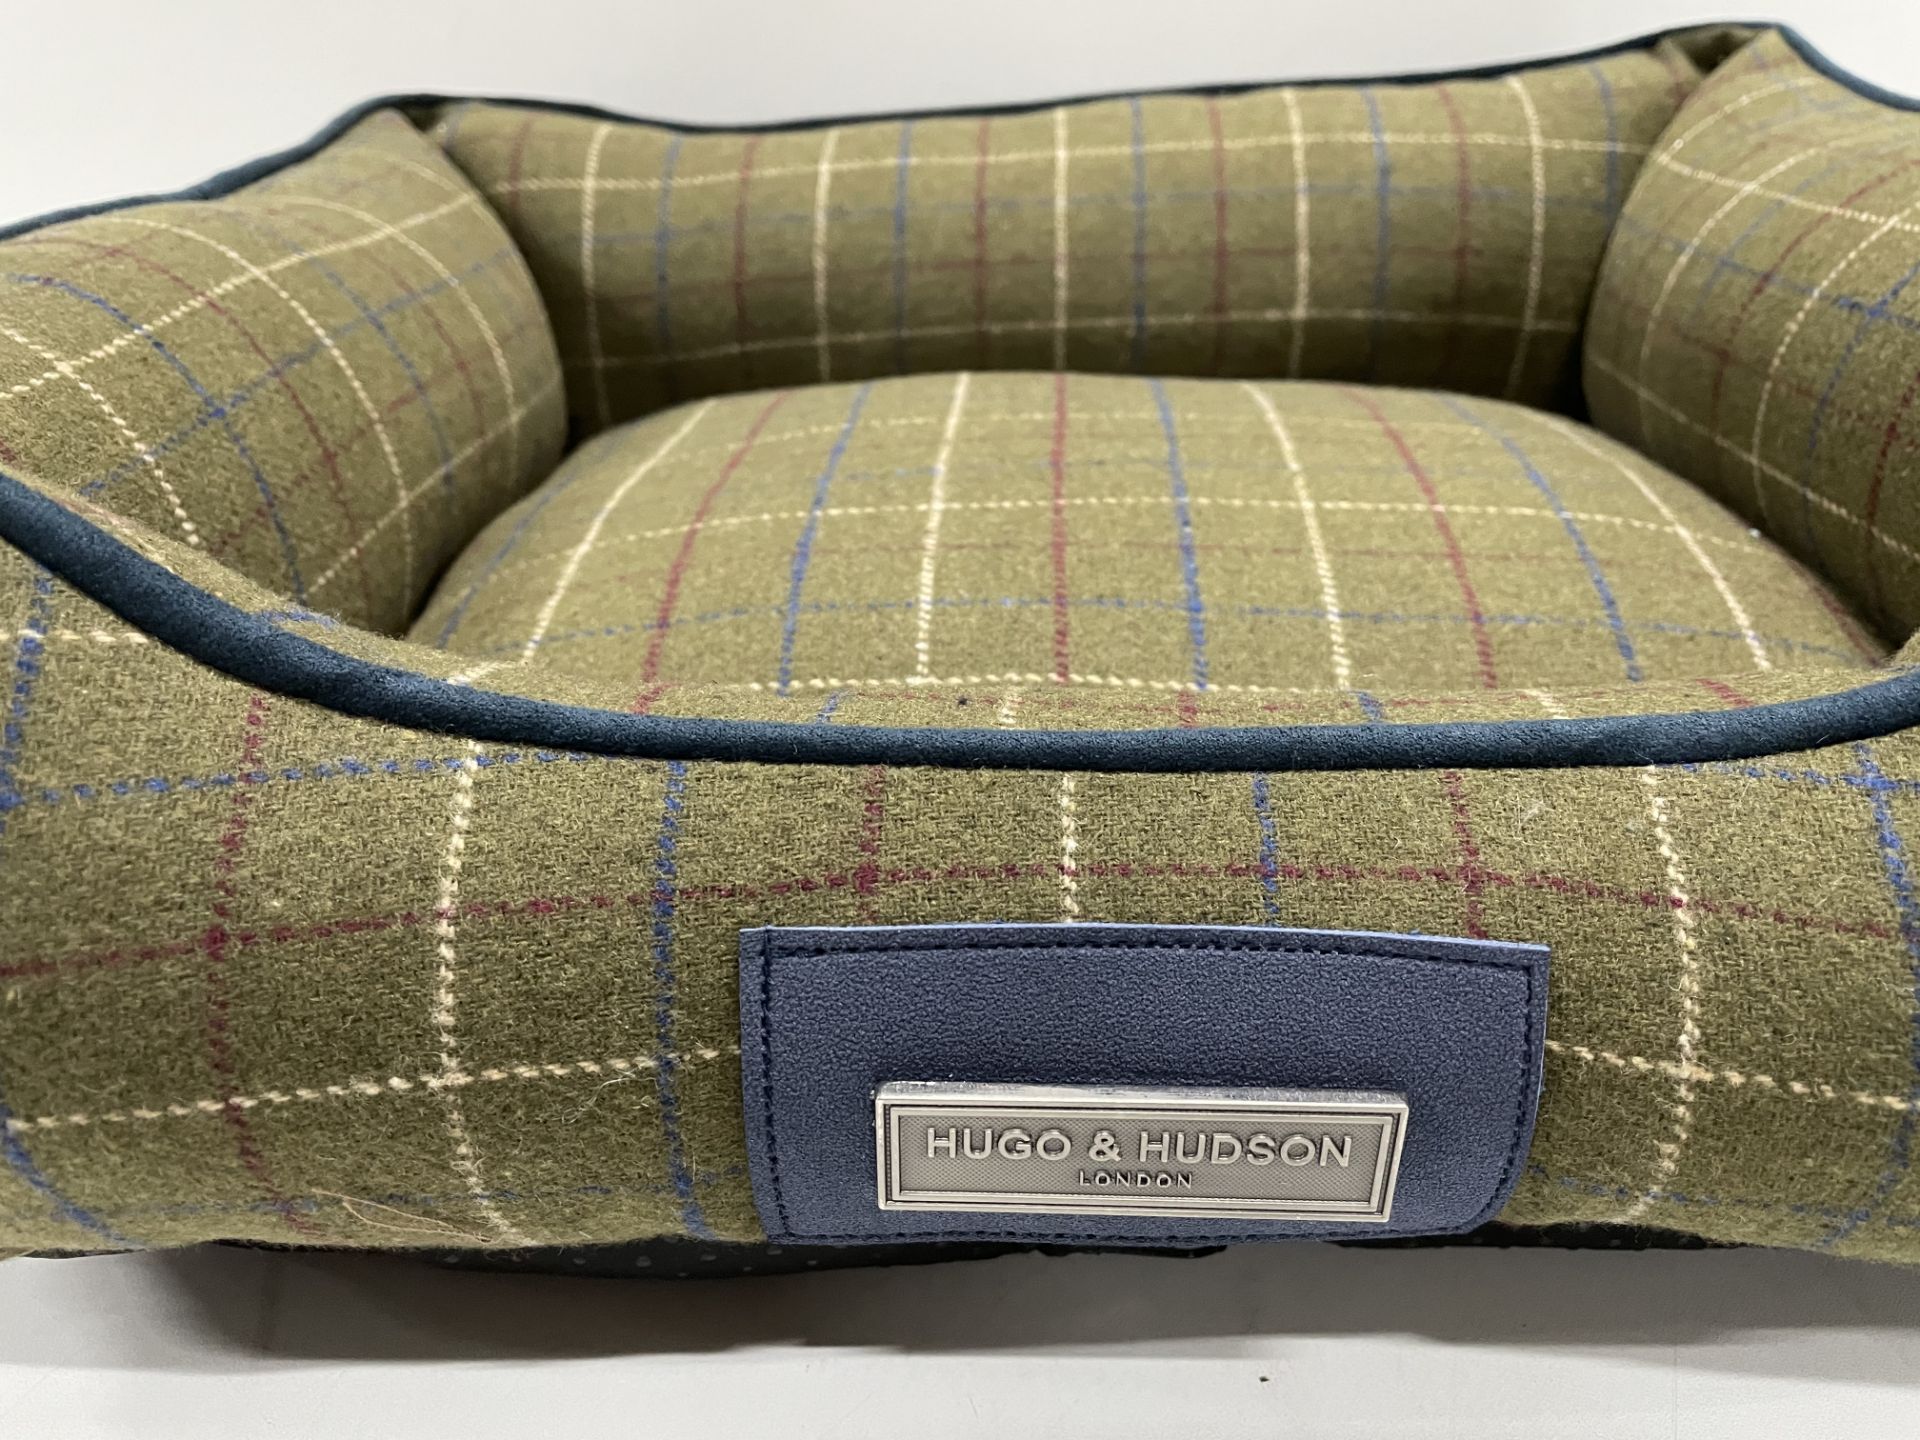 Hugo & Hudson S Checked Tweed Pet Bed - Dark Green - RRP£59.99 - Image 2 of 2